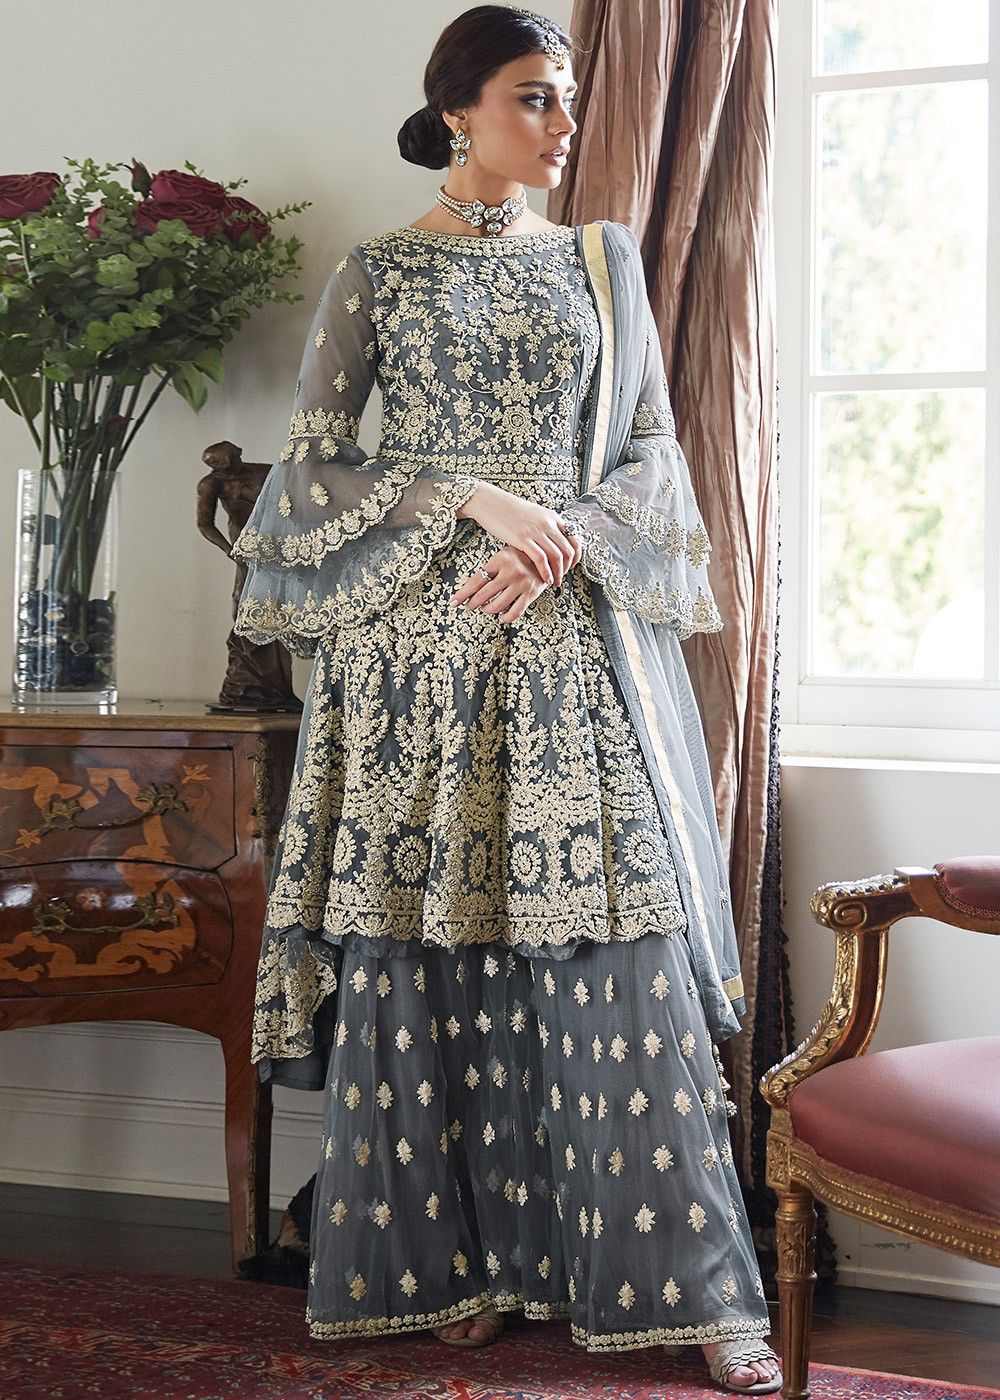 latest embroidered pakistani suits